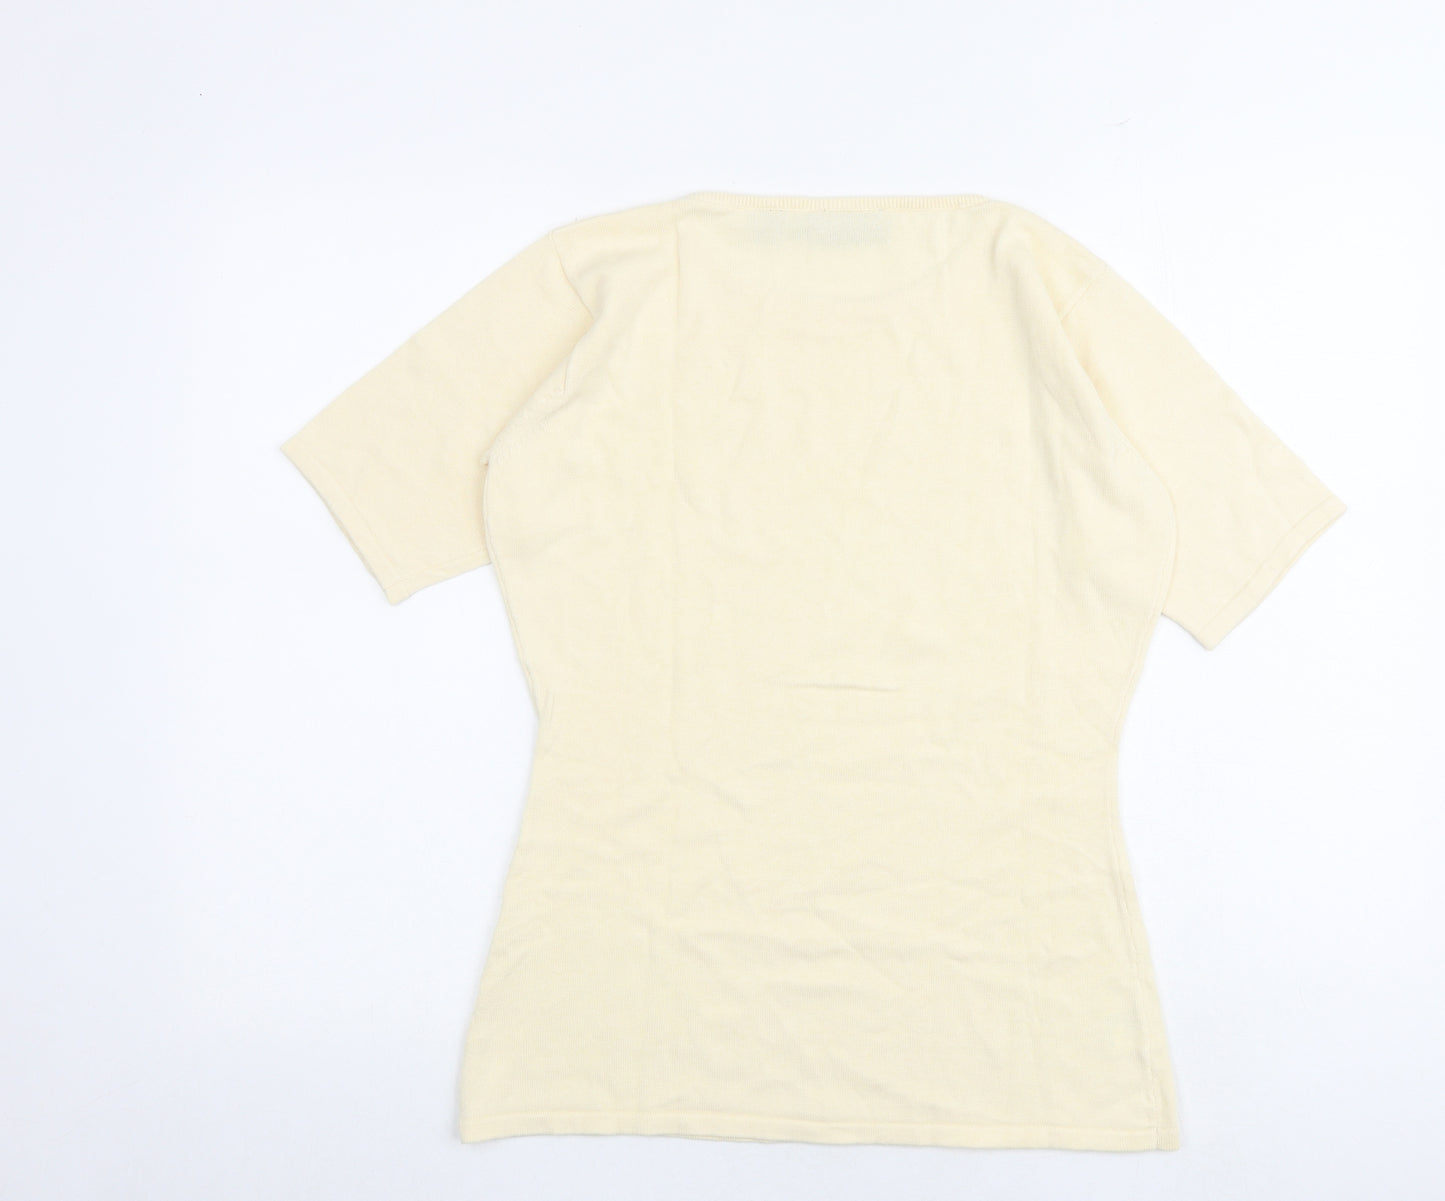 Timberland Womens Ivory 100% Cotton Basic T-Shirt Size M Round Neck